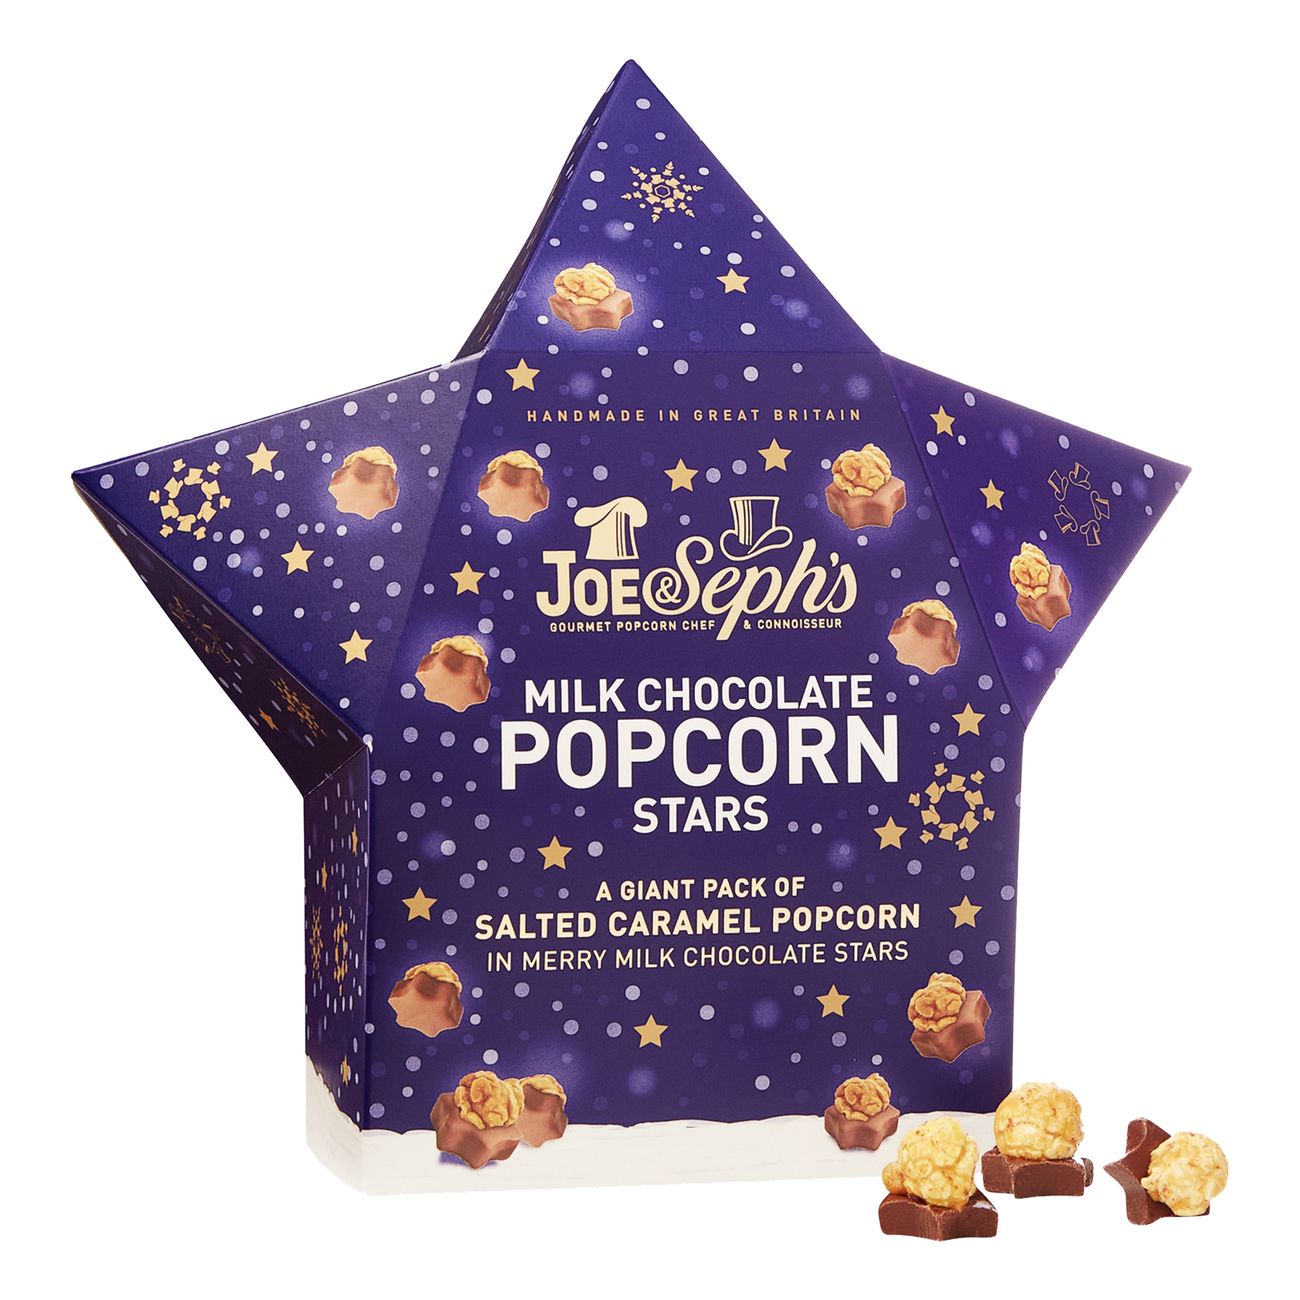 milk-chocolate-popcorn-stars-festive-gift-box-98897-1